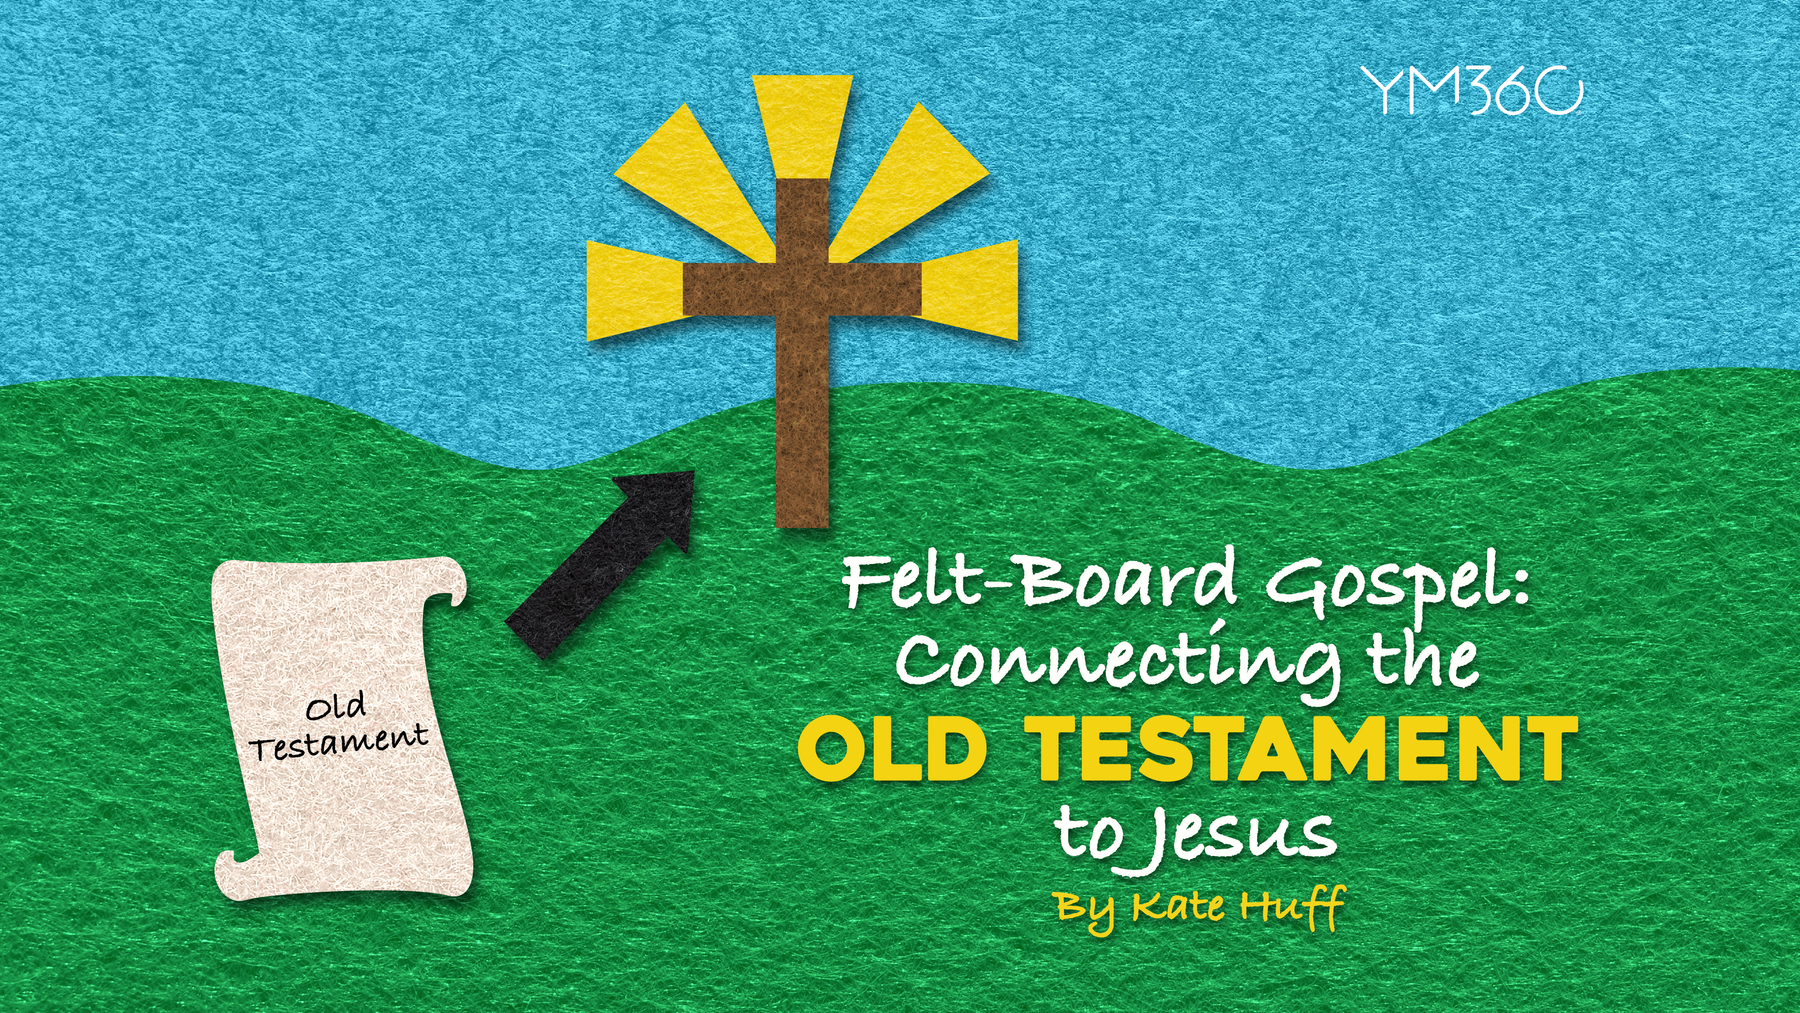 Felt-Board Gospel: Connecting the Old Testament to Jesus